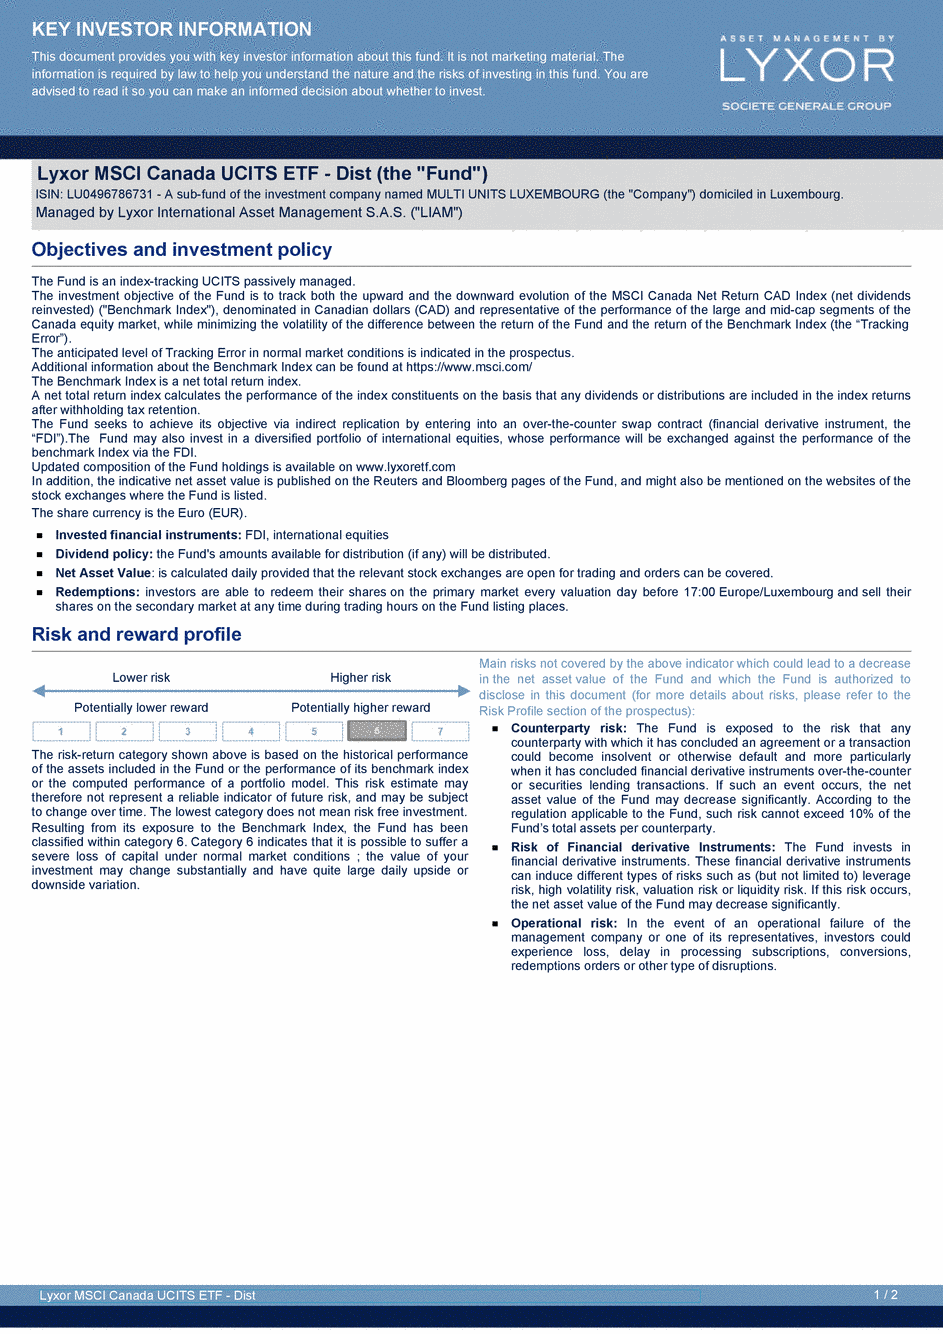 DICI Lyxor MSCI Canada UCITS ETF - Dist - 19/02/2021 - Anglais